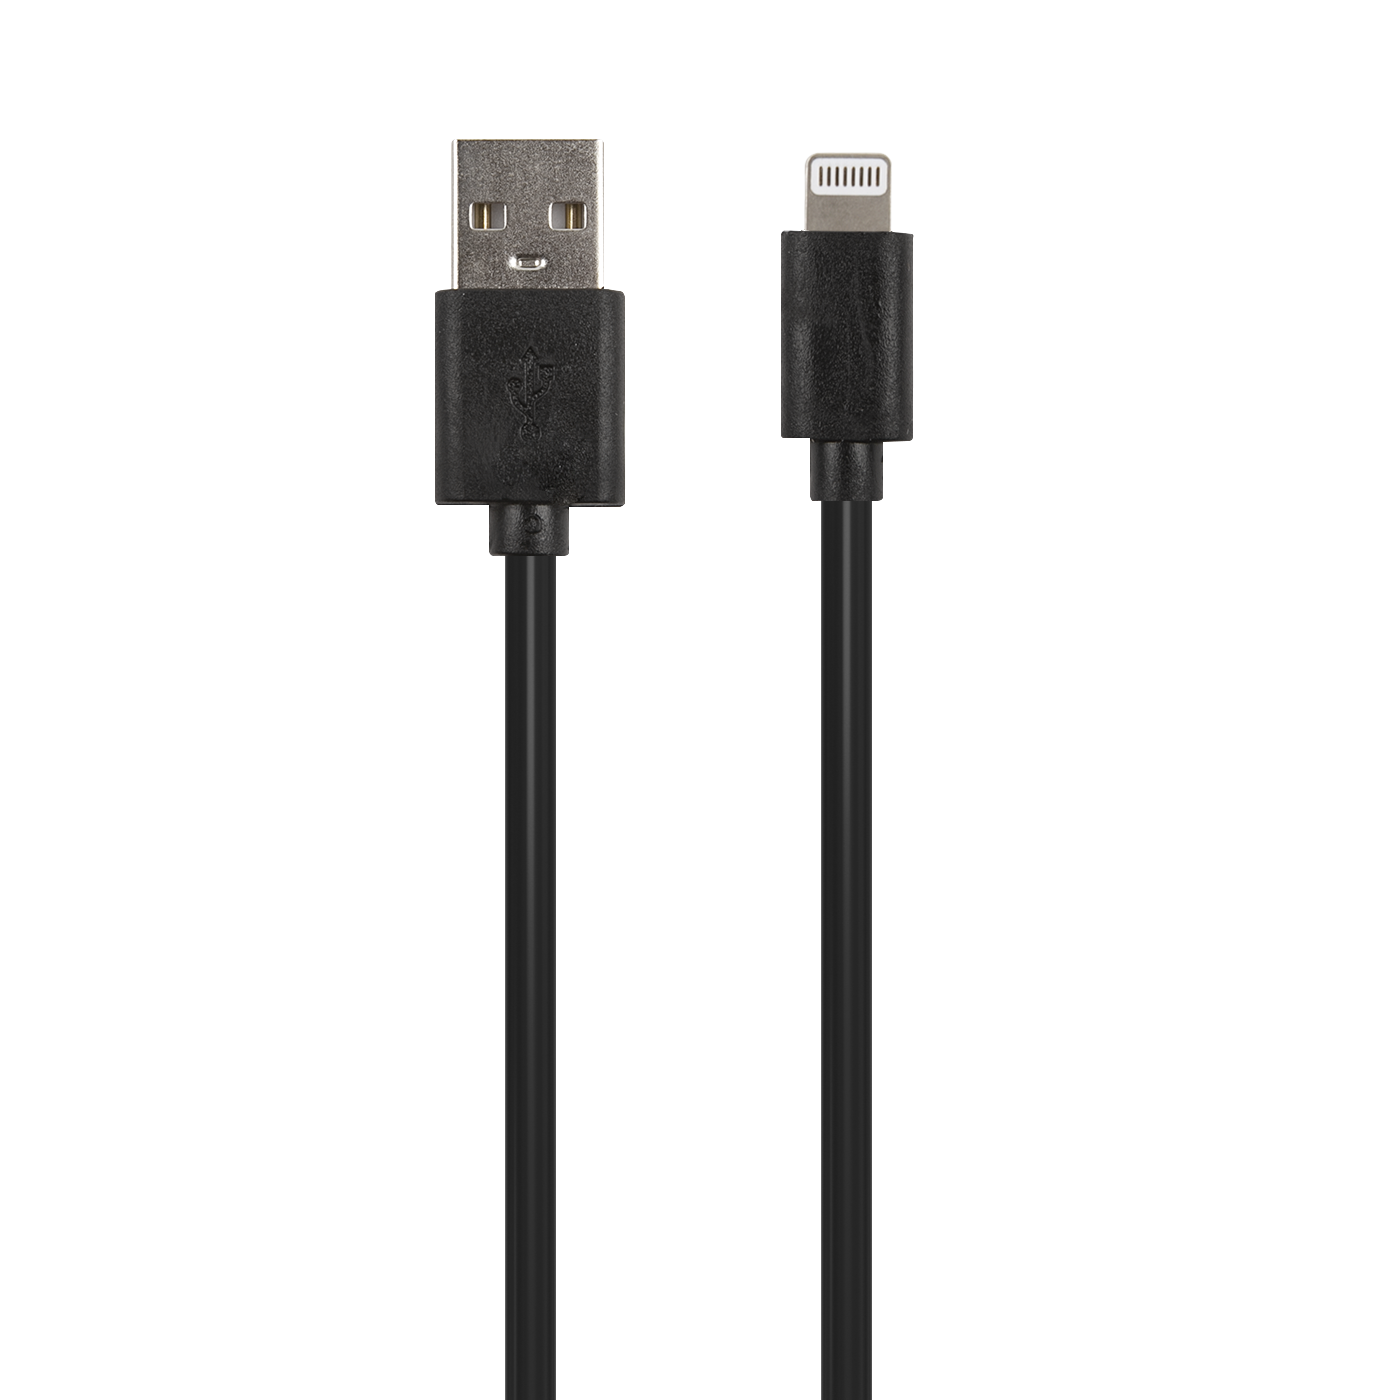 Дата-кабель Red Line USB - 8-pin для Apple, 1.5A, 20 см